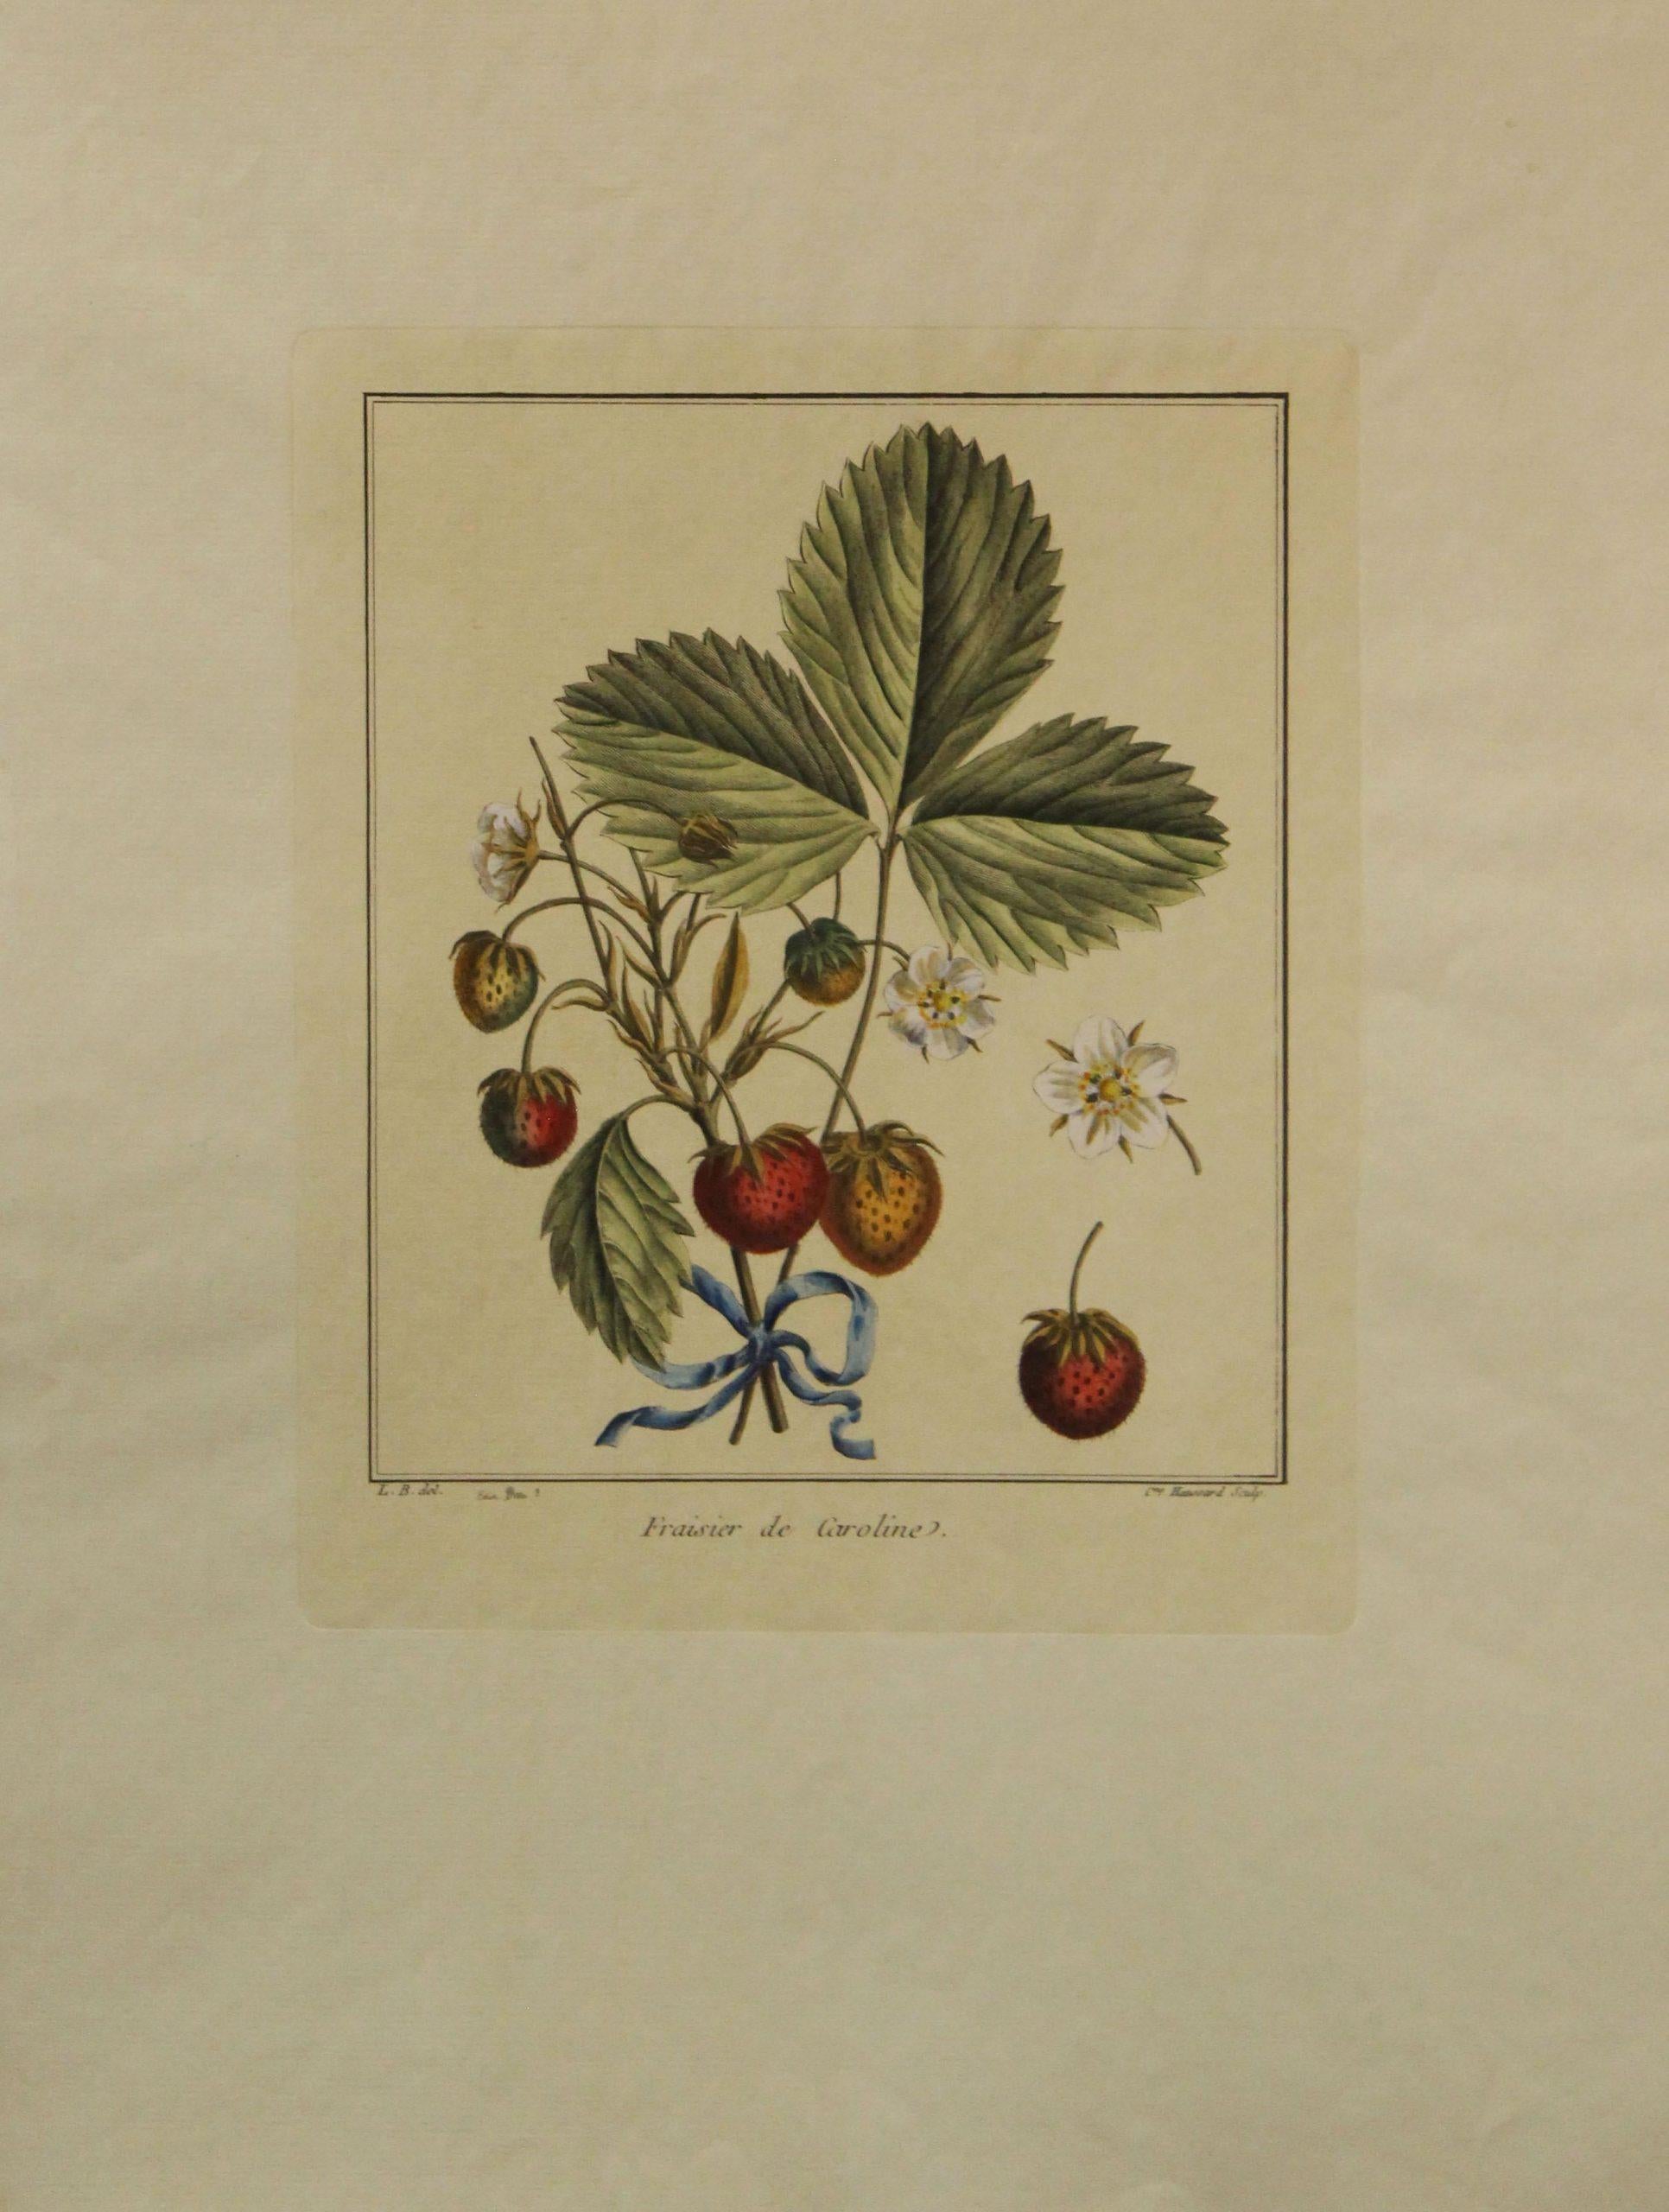 Unknown Still-Life Print - Fraisier de Caroline-Vintage Botanical Print